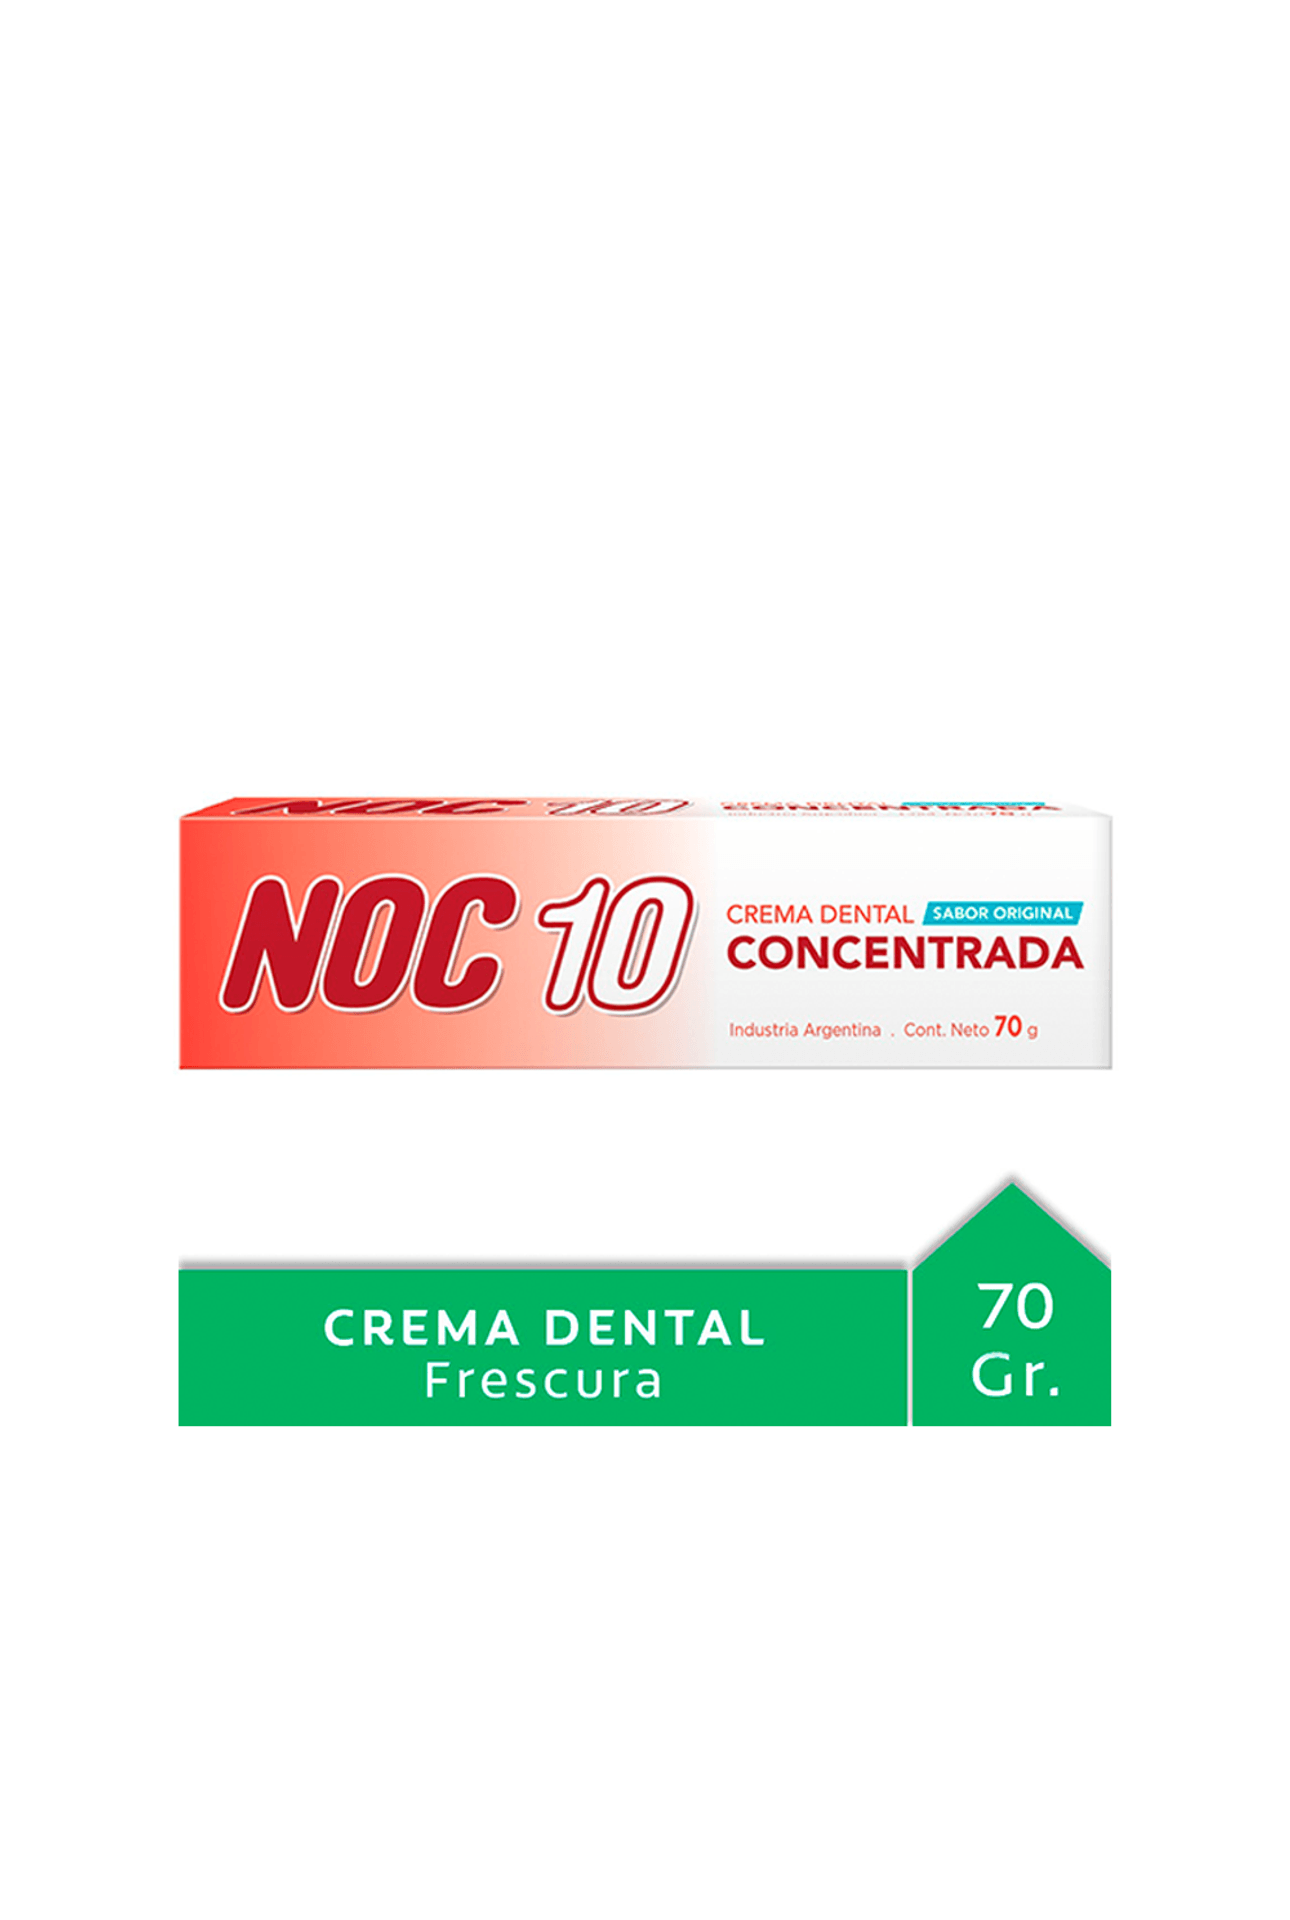 2115594_Noc-10-Crema-Dental-Concentrada-x-70-gr_img1